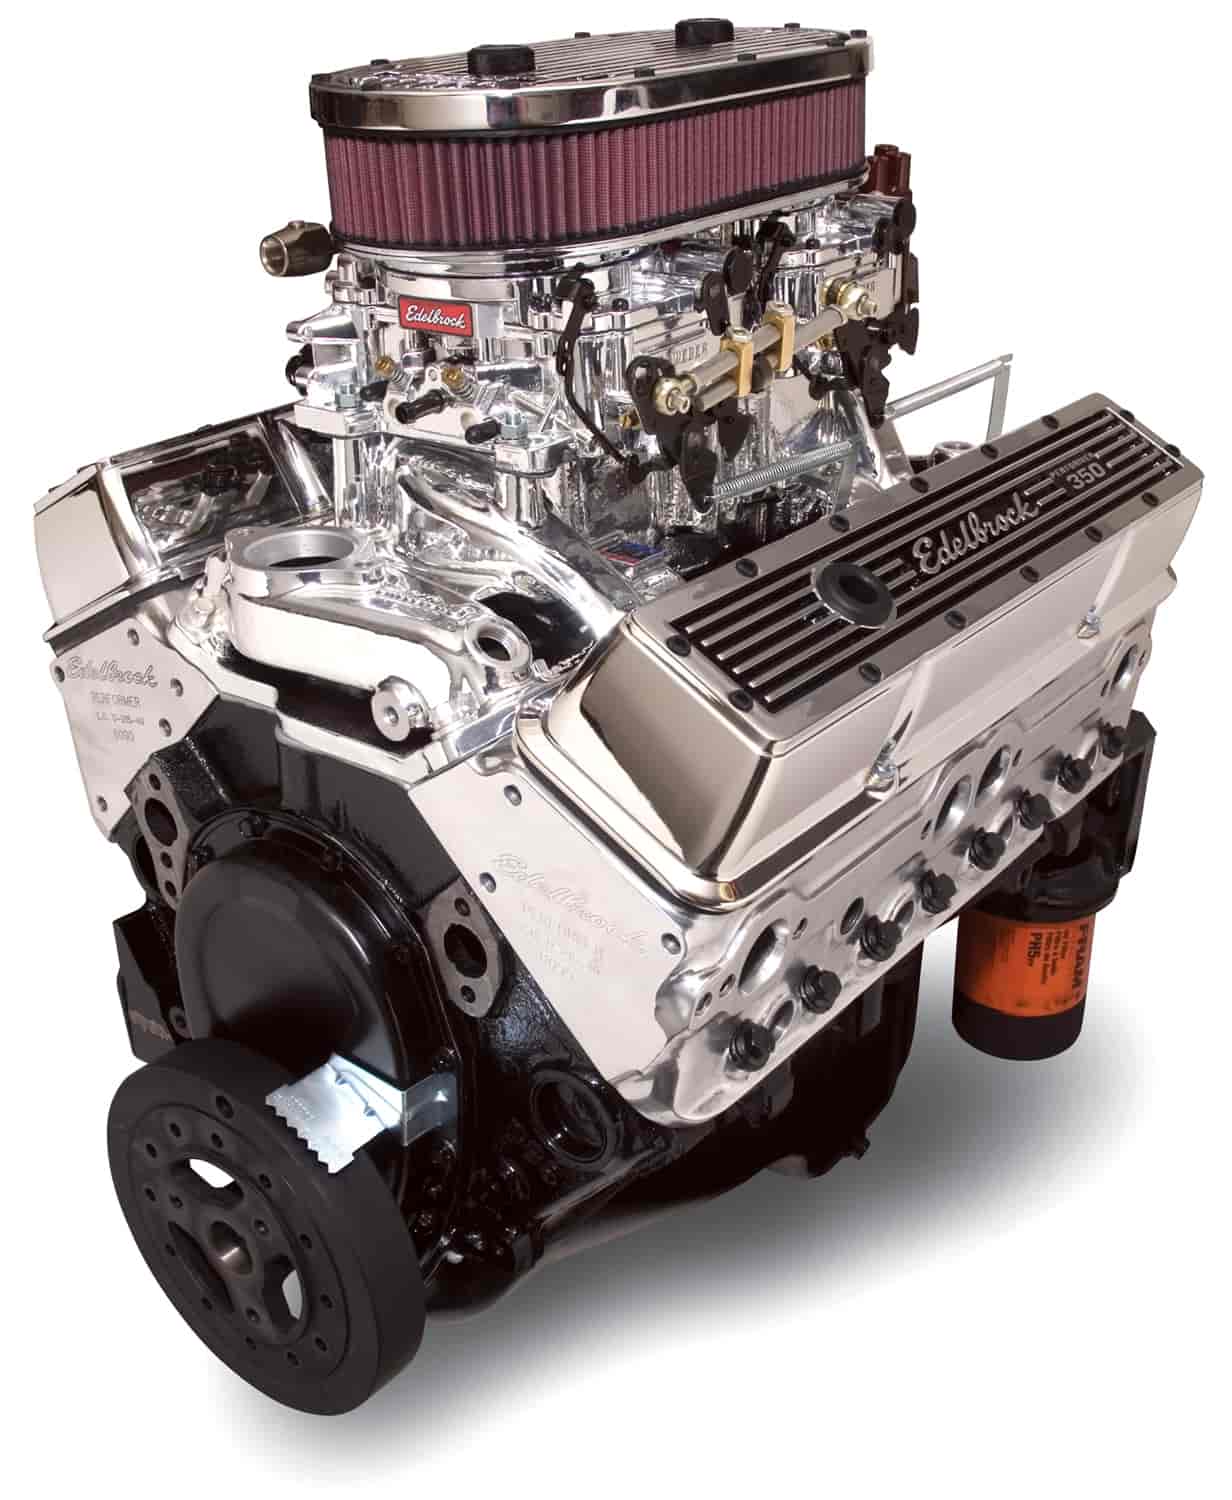 Performer Dual Quad SBC 350ci/315hp Crate Engine w/ RPM Air-Gap Manifold & Short Water Pump